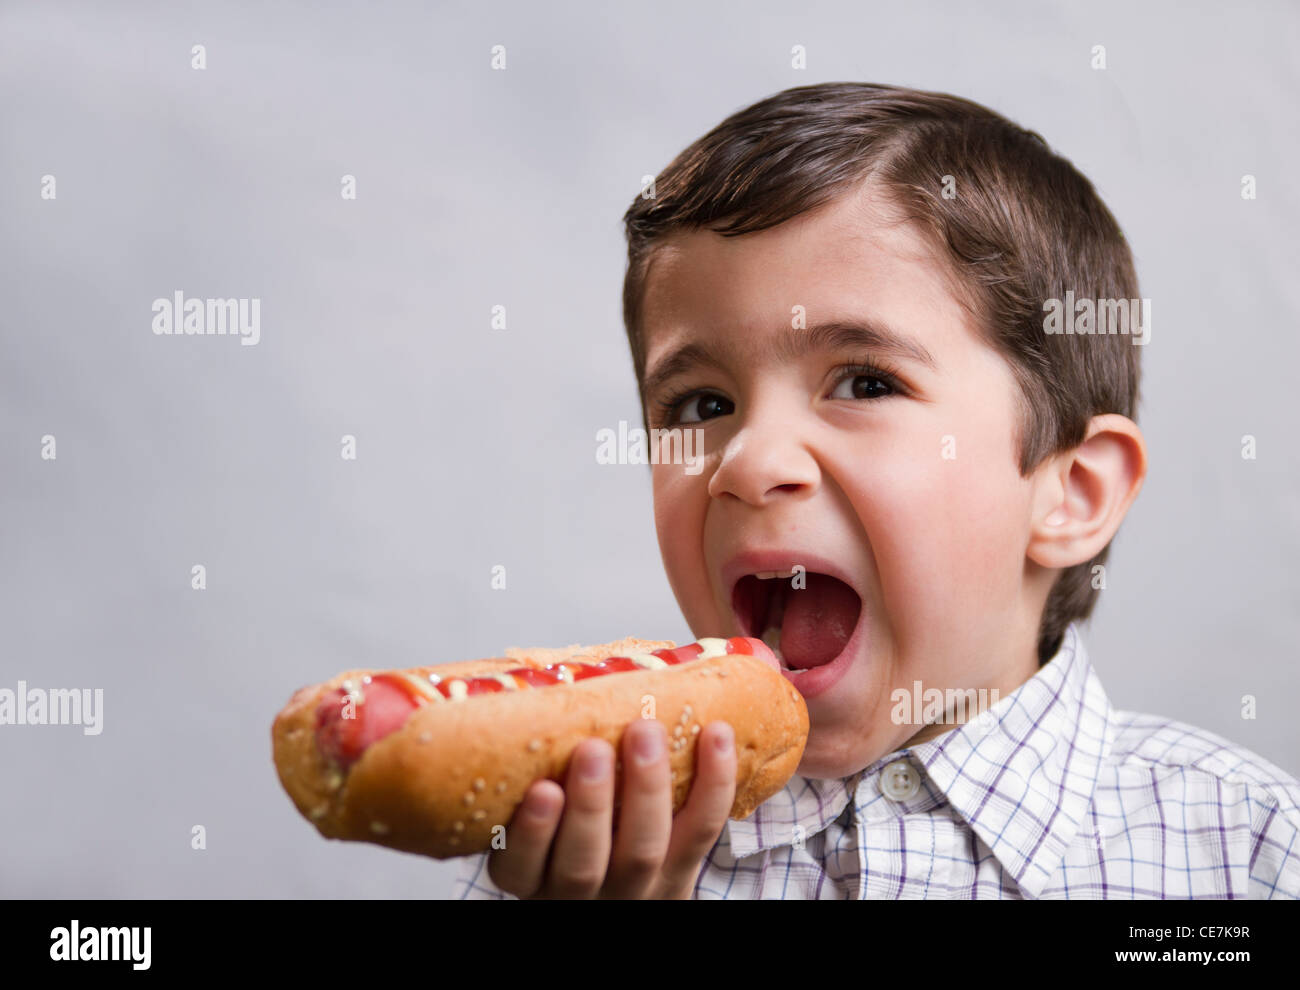 boy eating hotdog Stock Photo